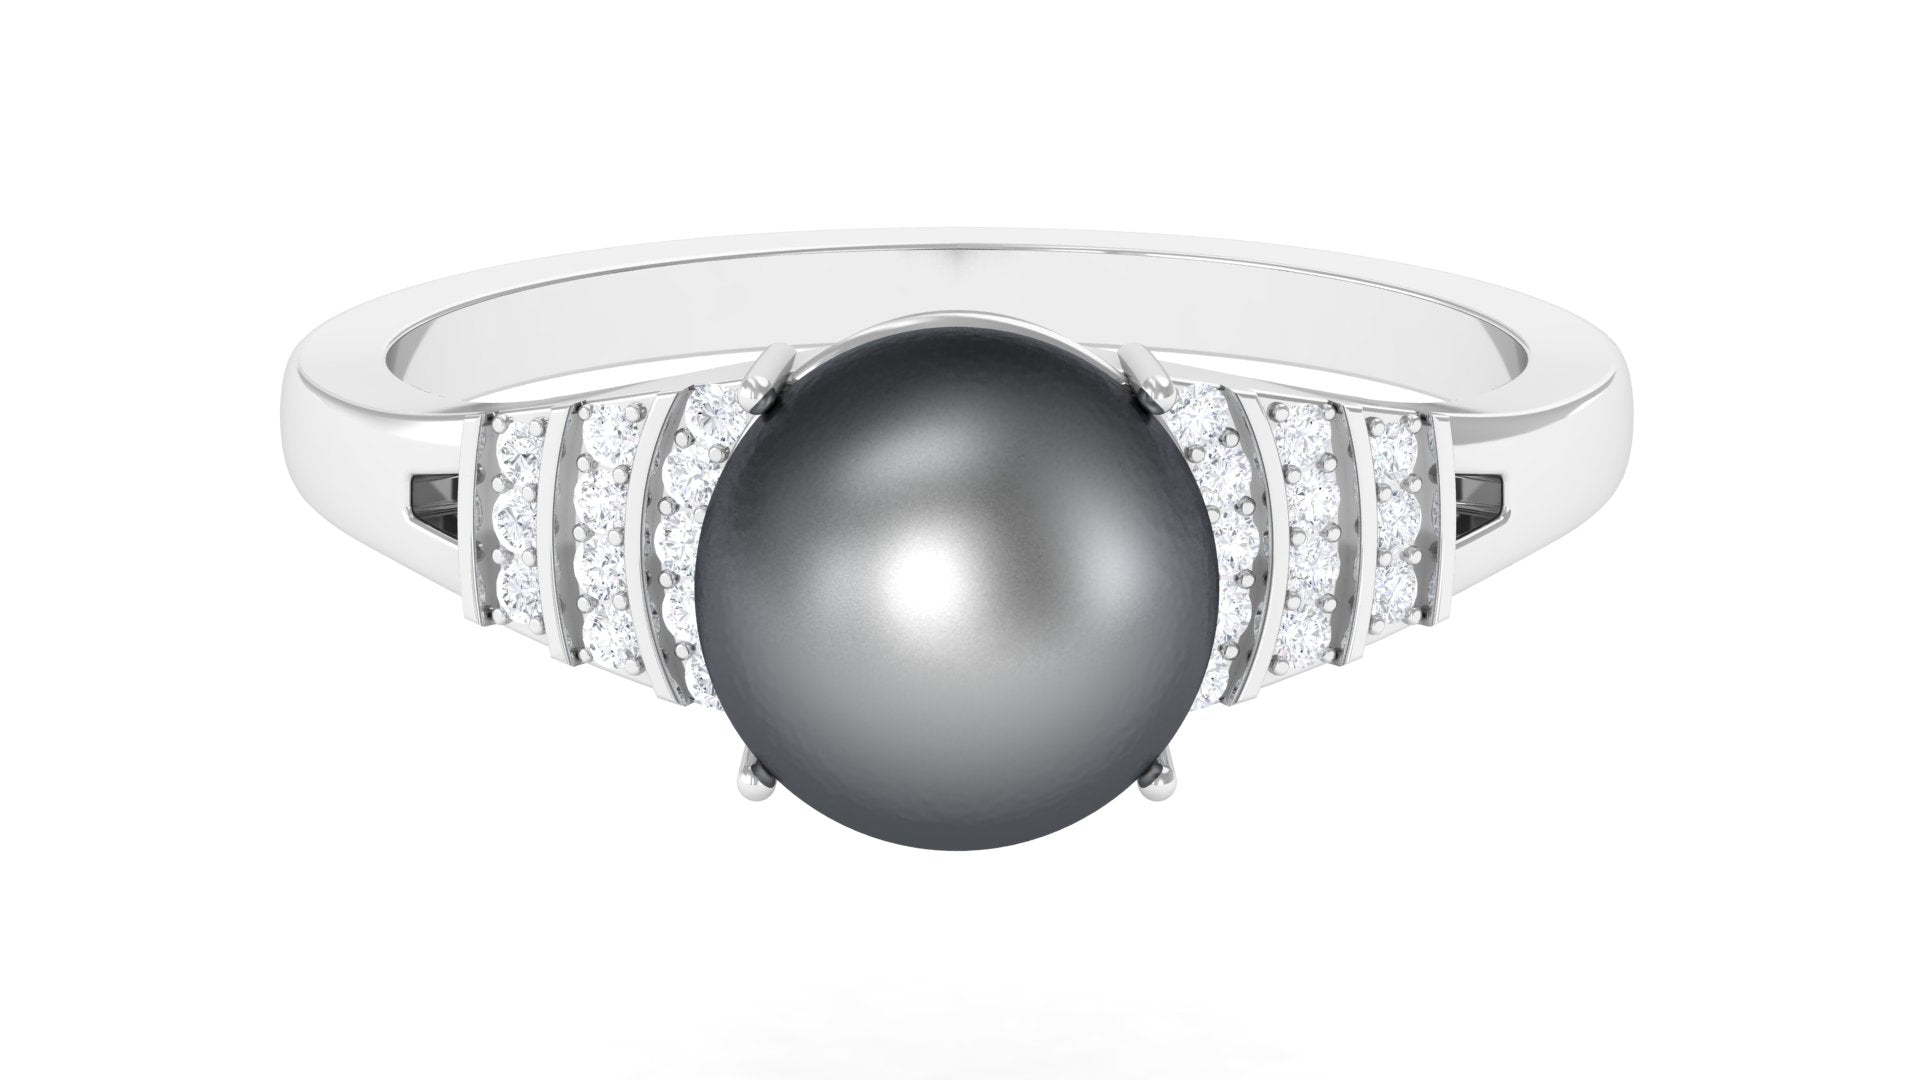 Vintage Inspired Black Pearl Solitaire Ring with Diamond Tahitian pearl-AAAA Quality - Arisha Jewels